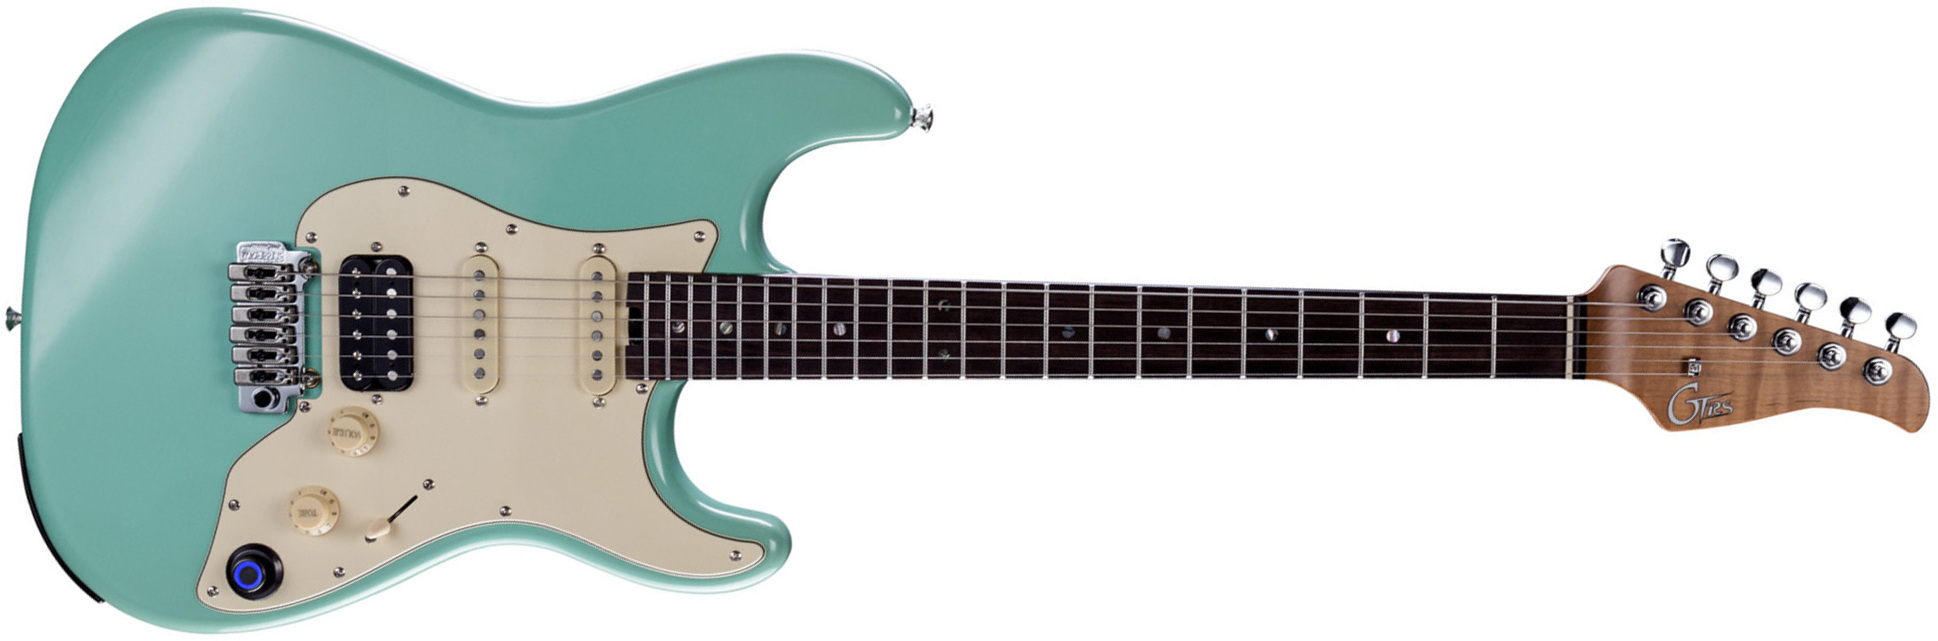 Mooer Gtrs P800 Pro Intelligent Guitar Hss Trem Rw - Mint Green - Modeling guitar - Main picture